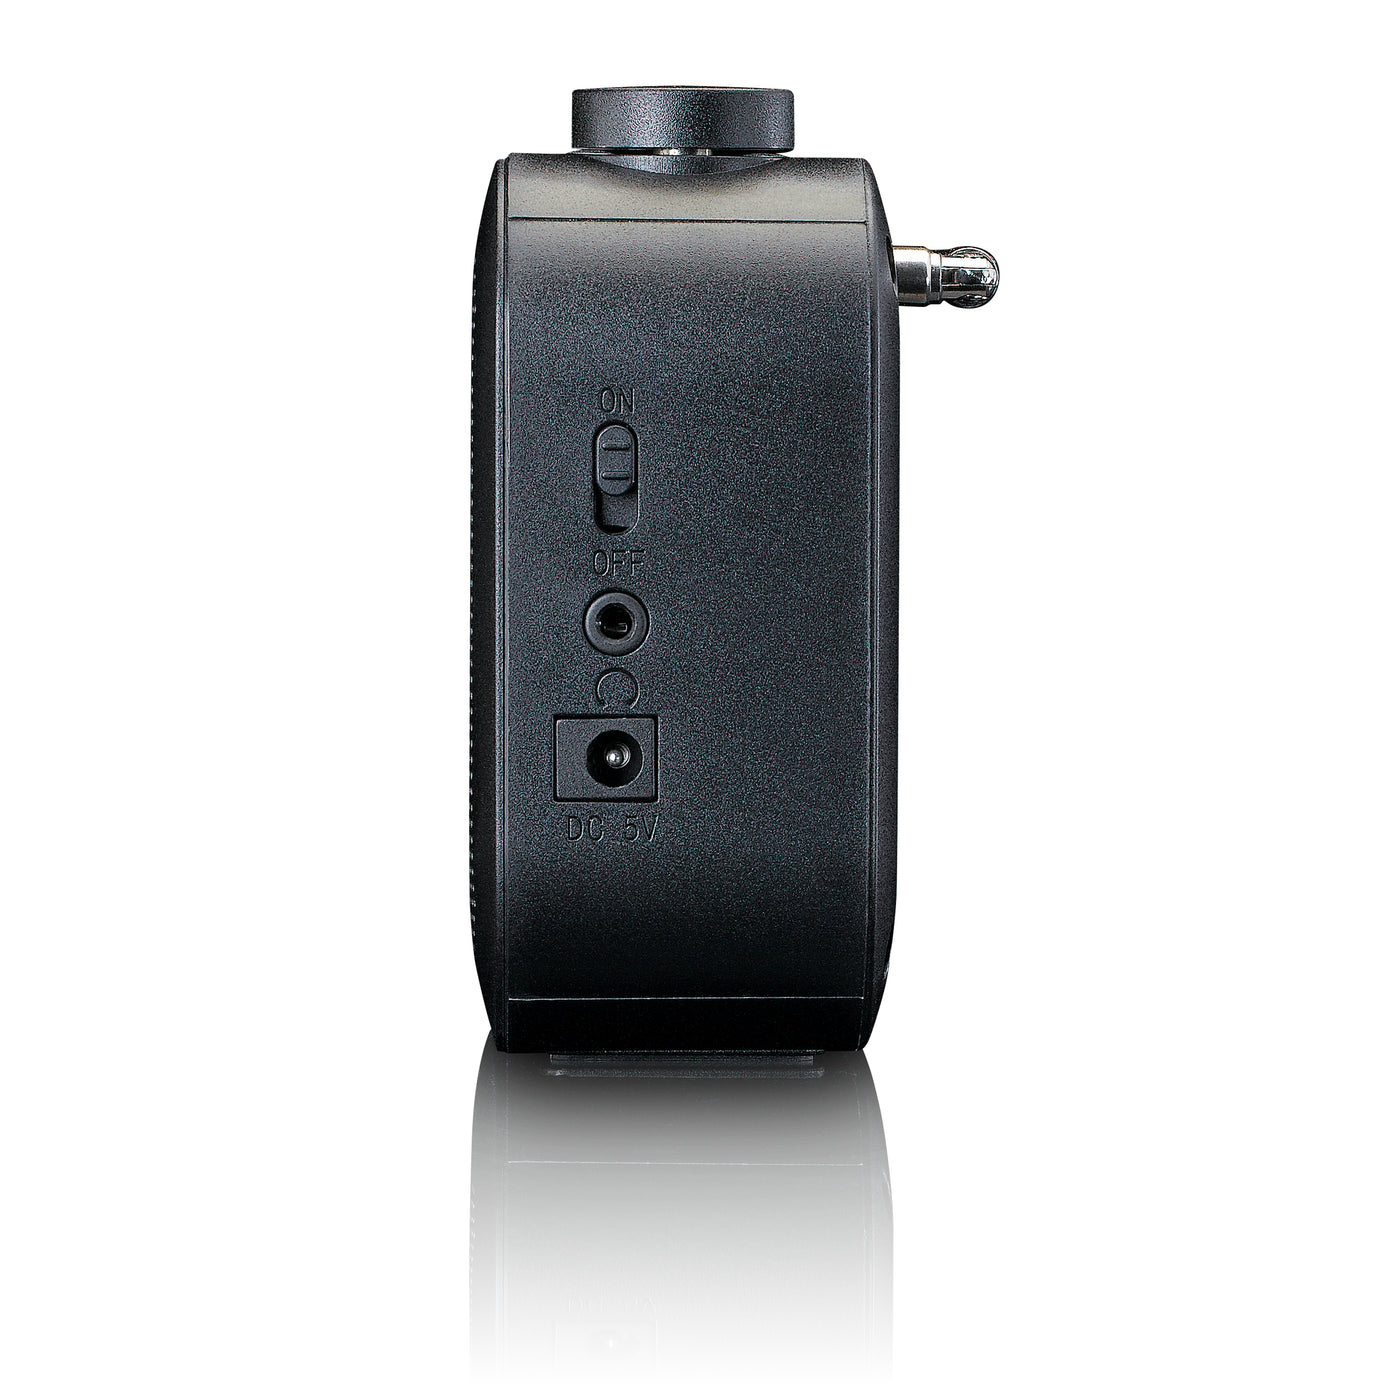 LENCO PDR-026BK - Portable DAB+/FM radio with Bluetooth® - Black – Lenco -Catalog